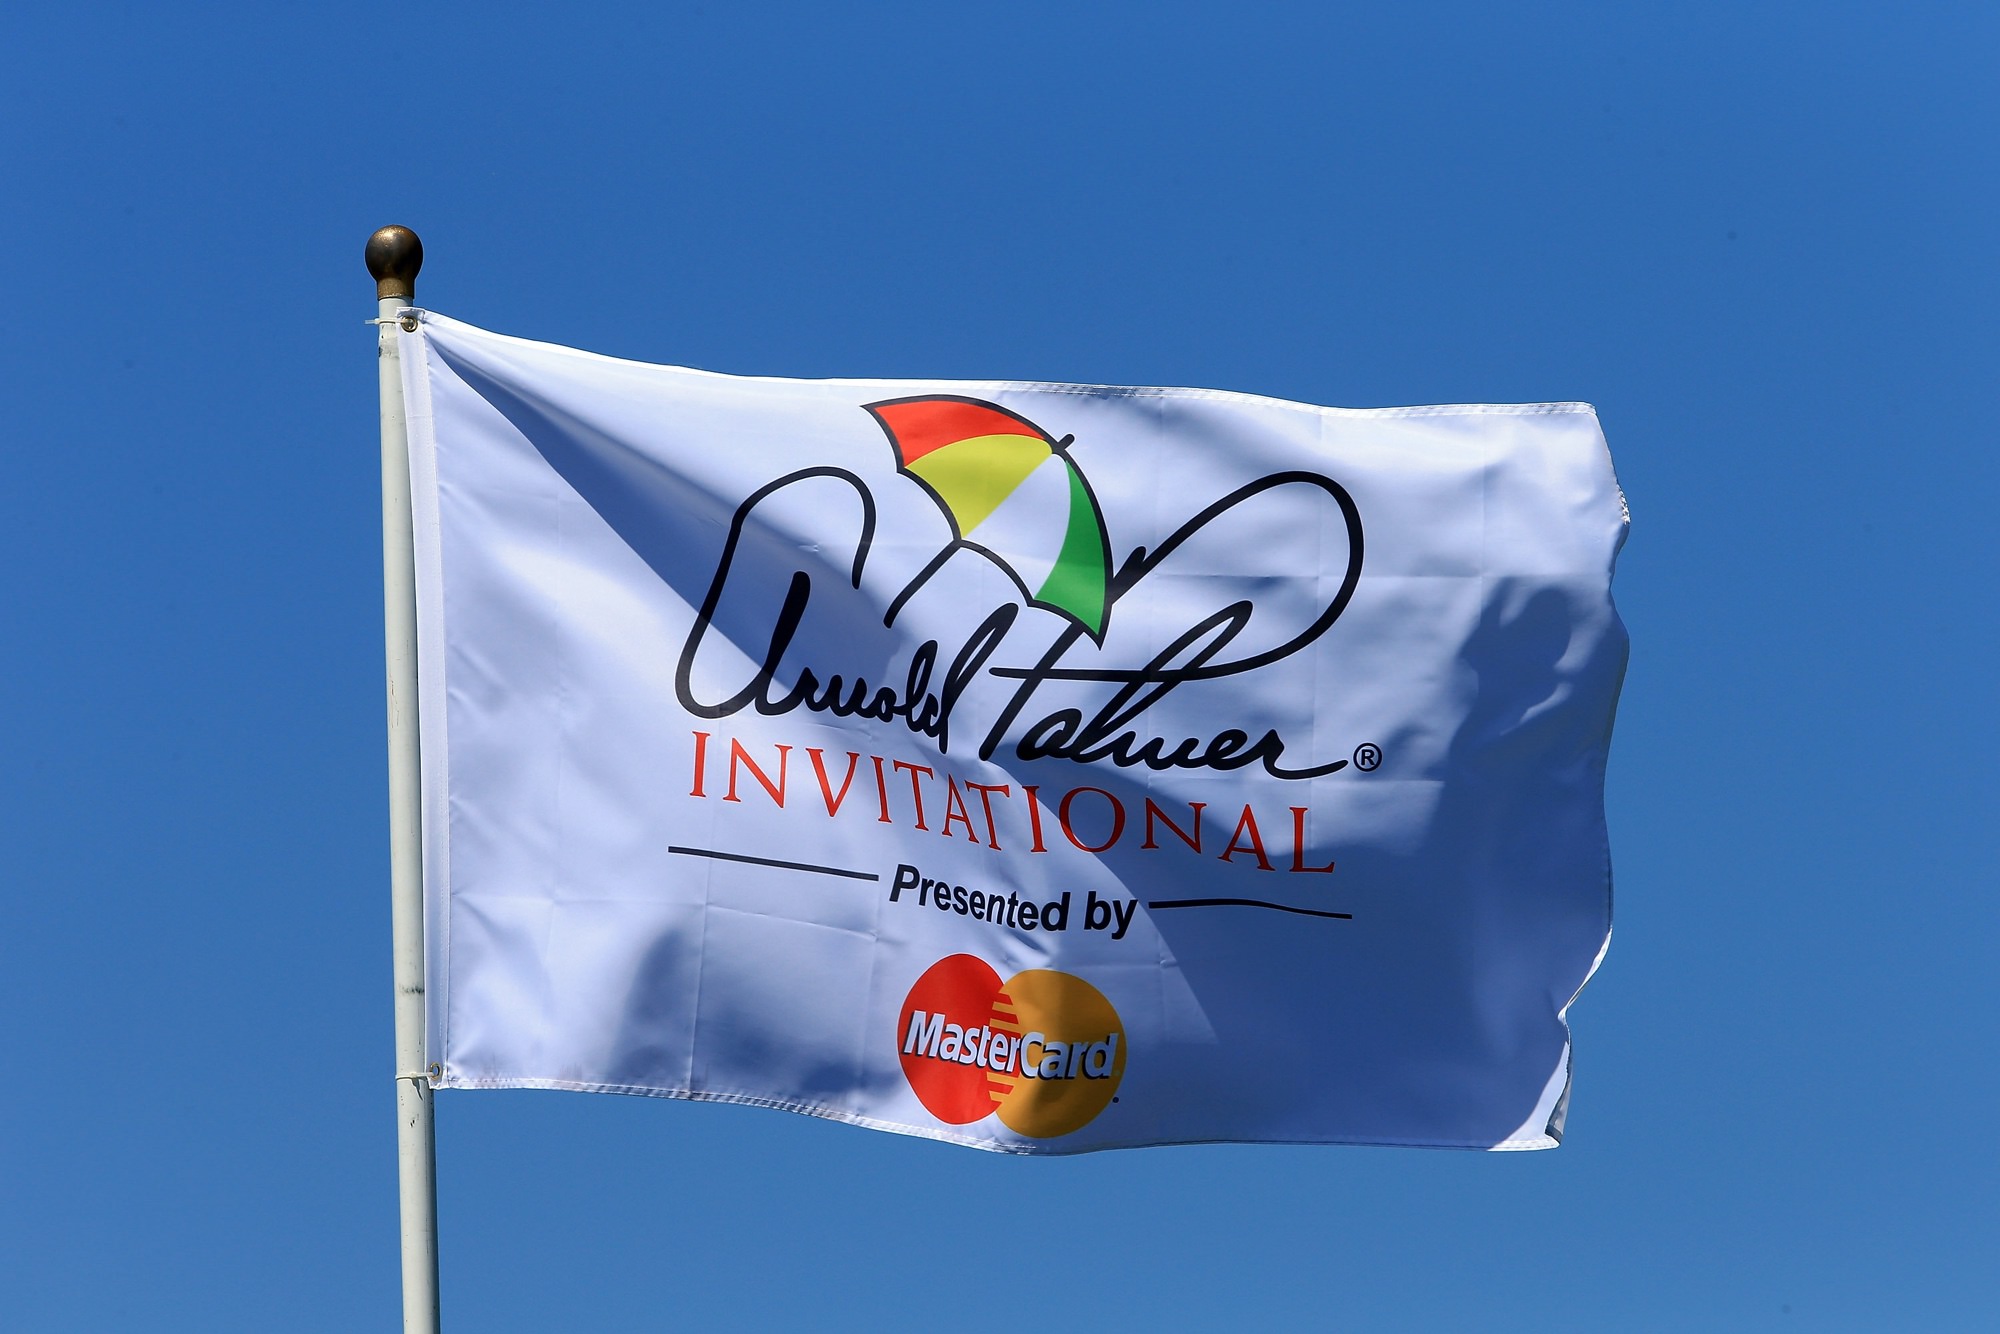 Arnold Palmer Invitational prize money 2020